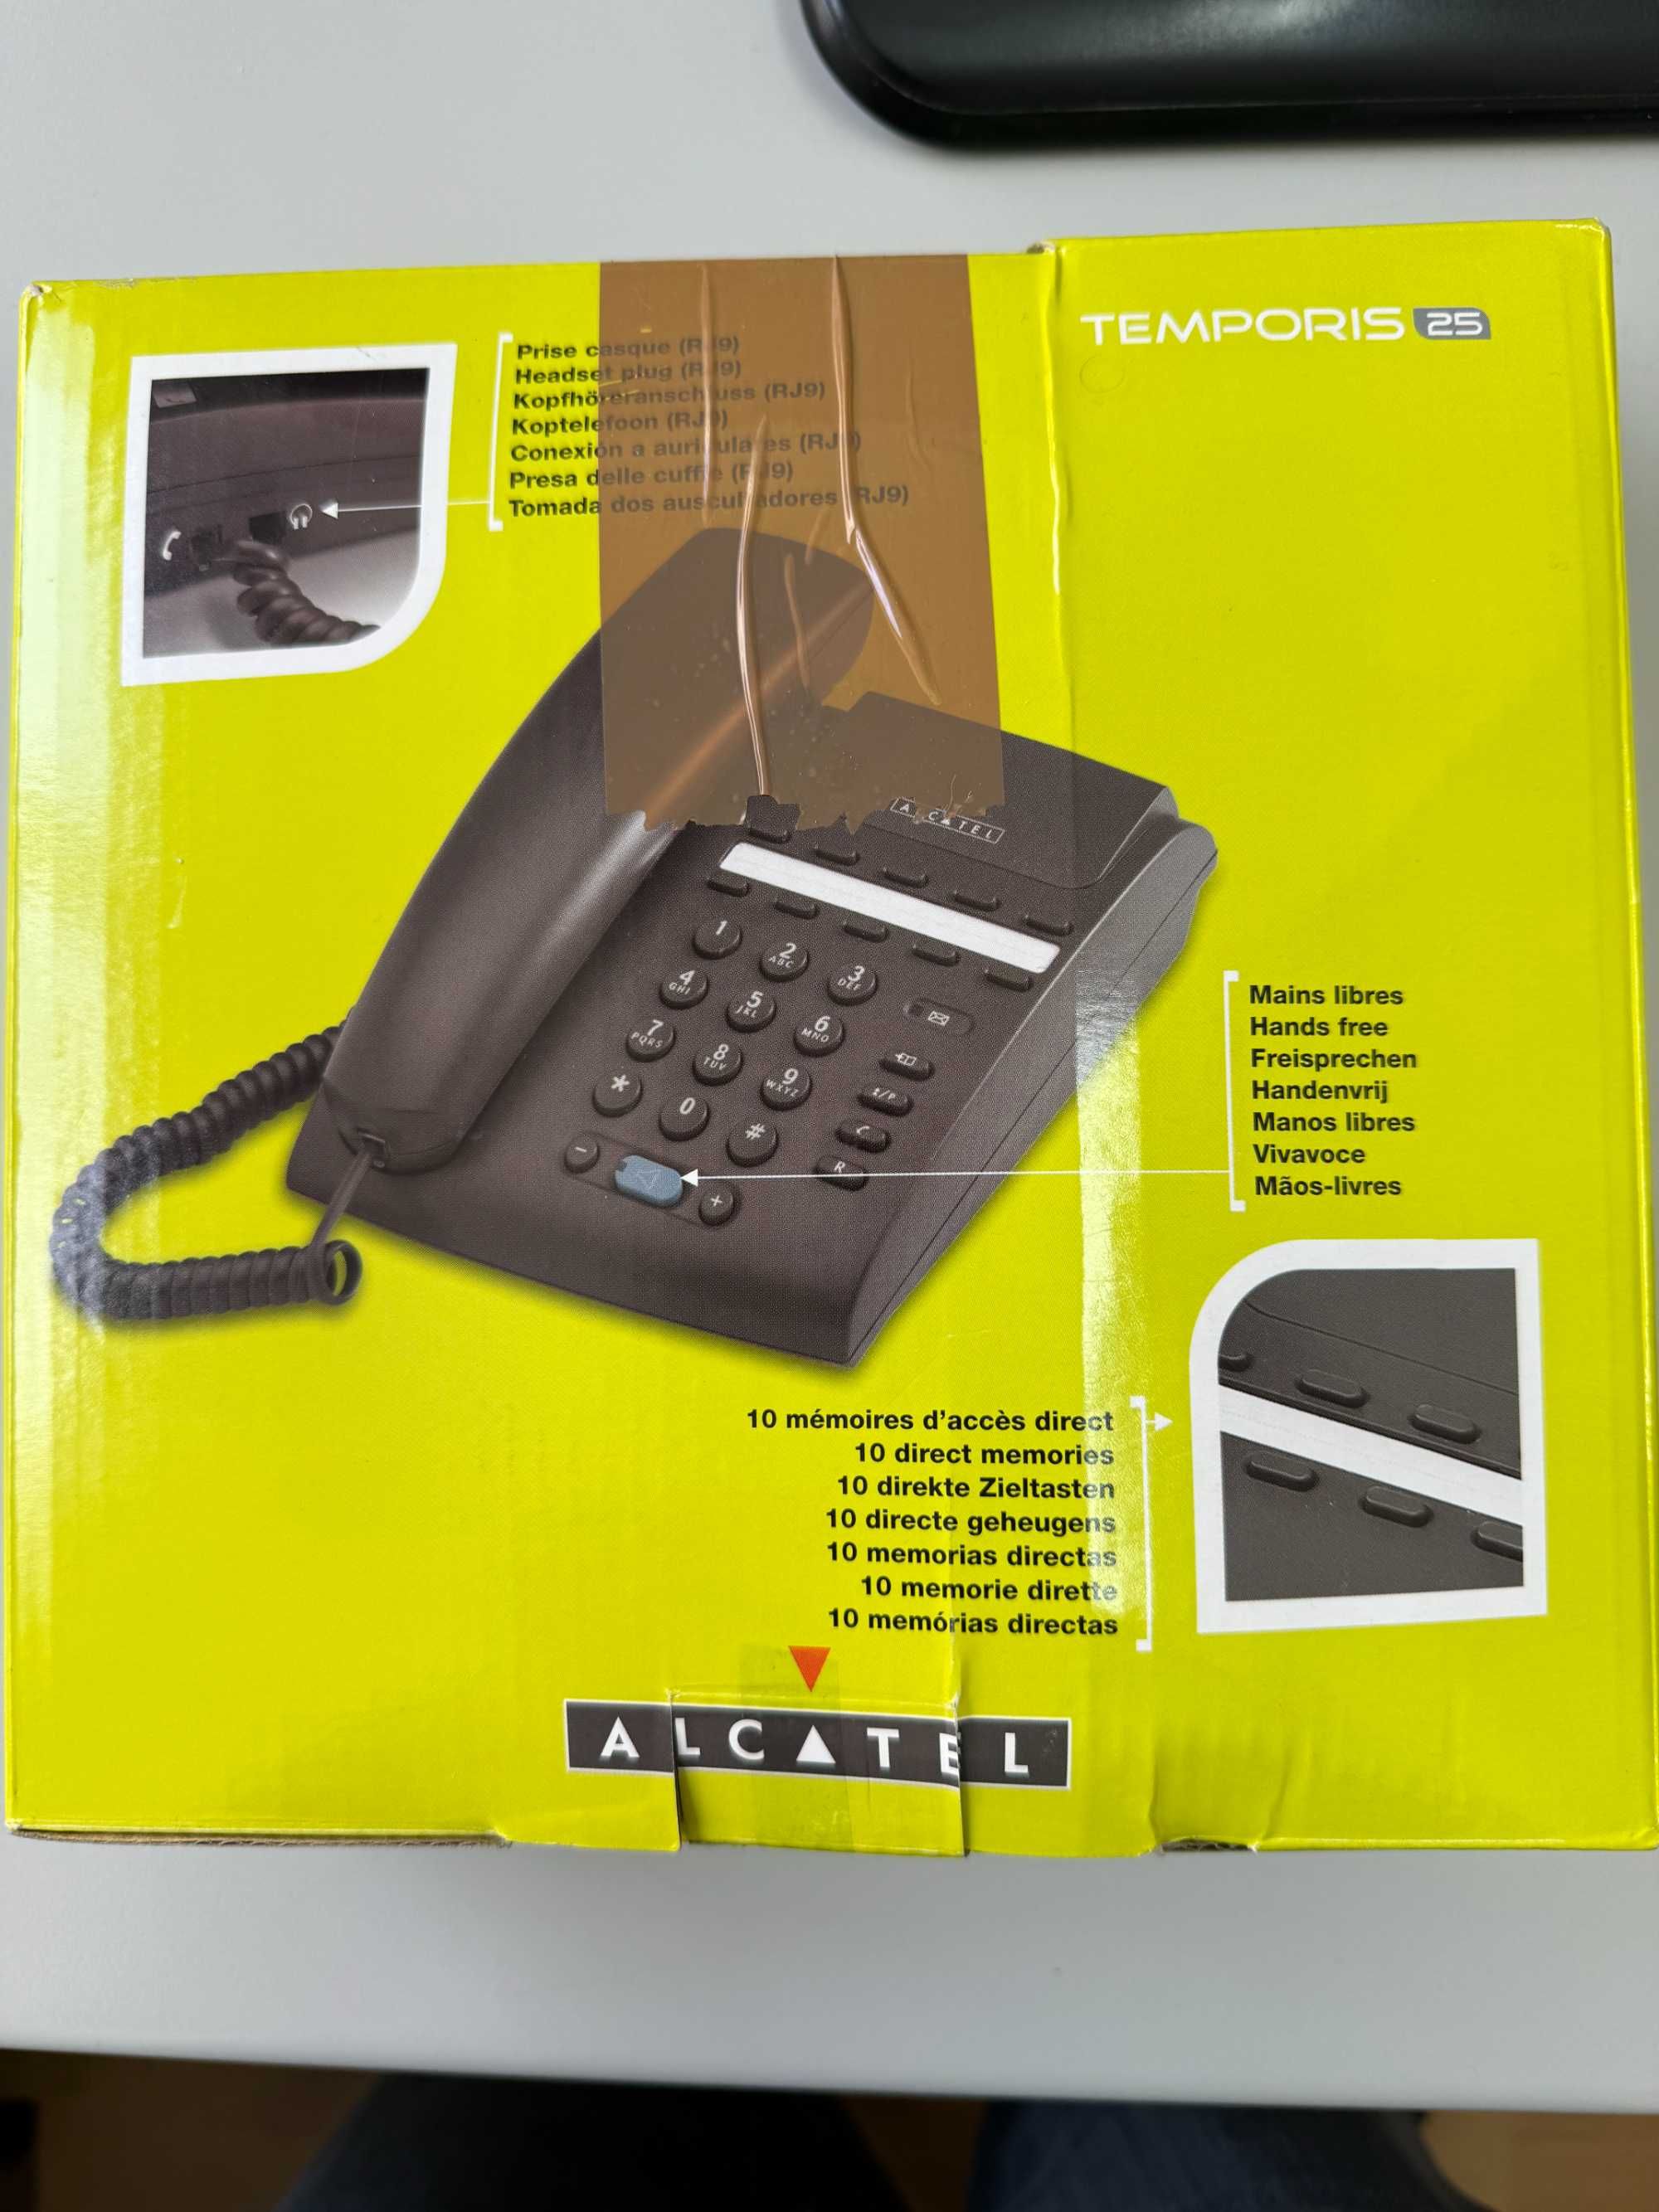 Telefone analógico Alcatel Temporis 25 Pro, novo